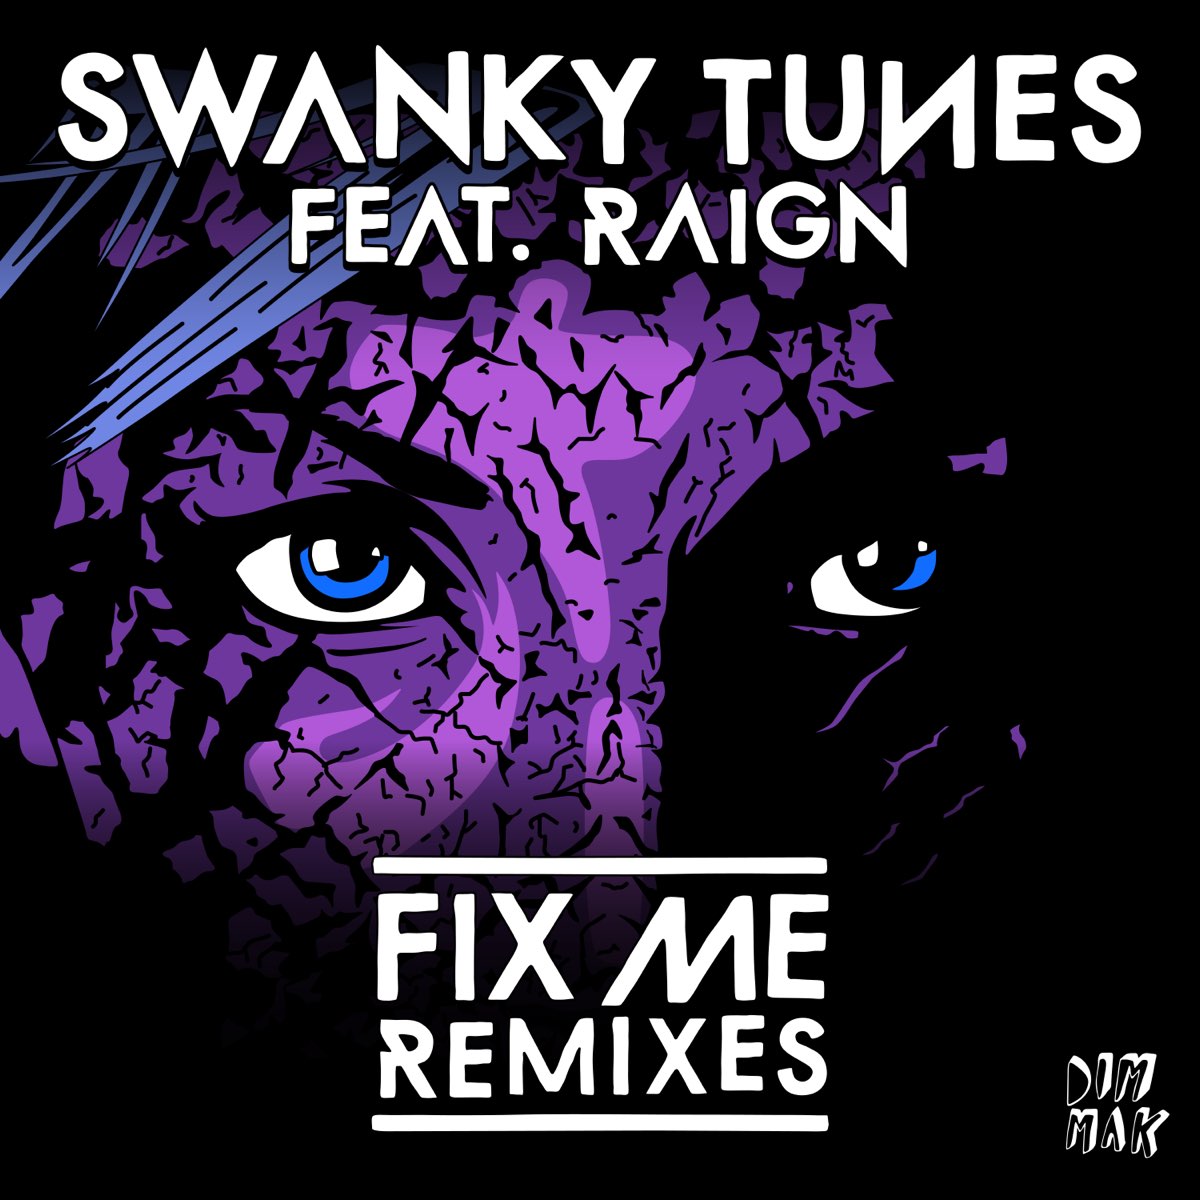 Swanky tunes remix. Swanky Tunes & Raign ~ Fix me. Dim Mak records 2015. Swanky Tunes Fix me выпускной. Swanky Tunes LP ремиксы.